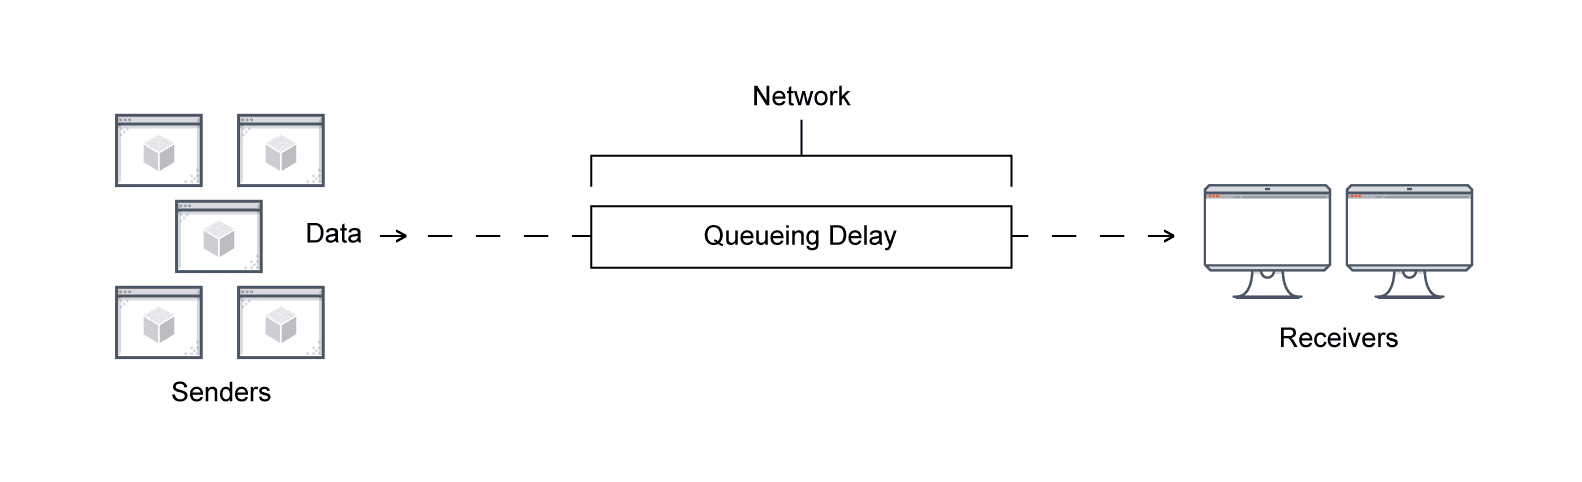 Network congestion diagram